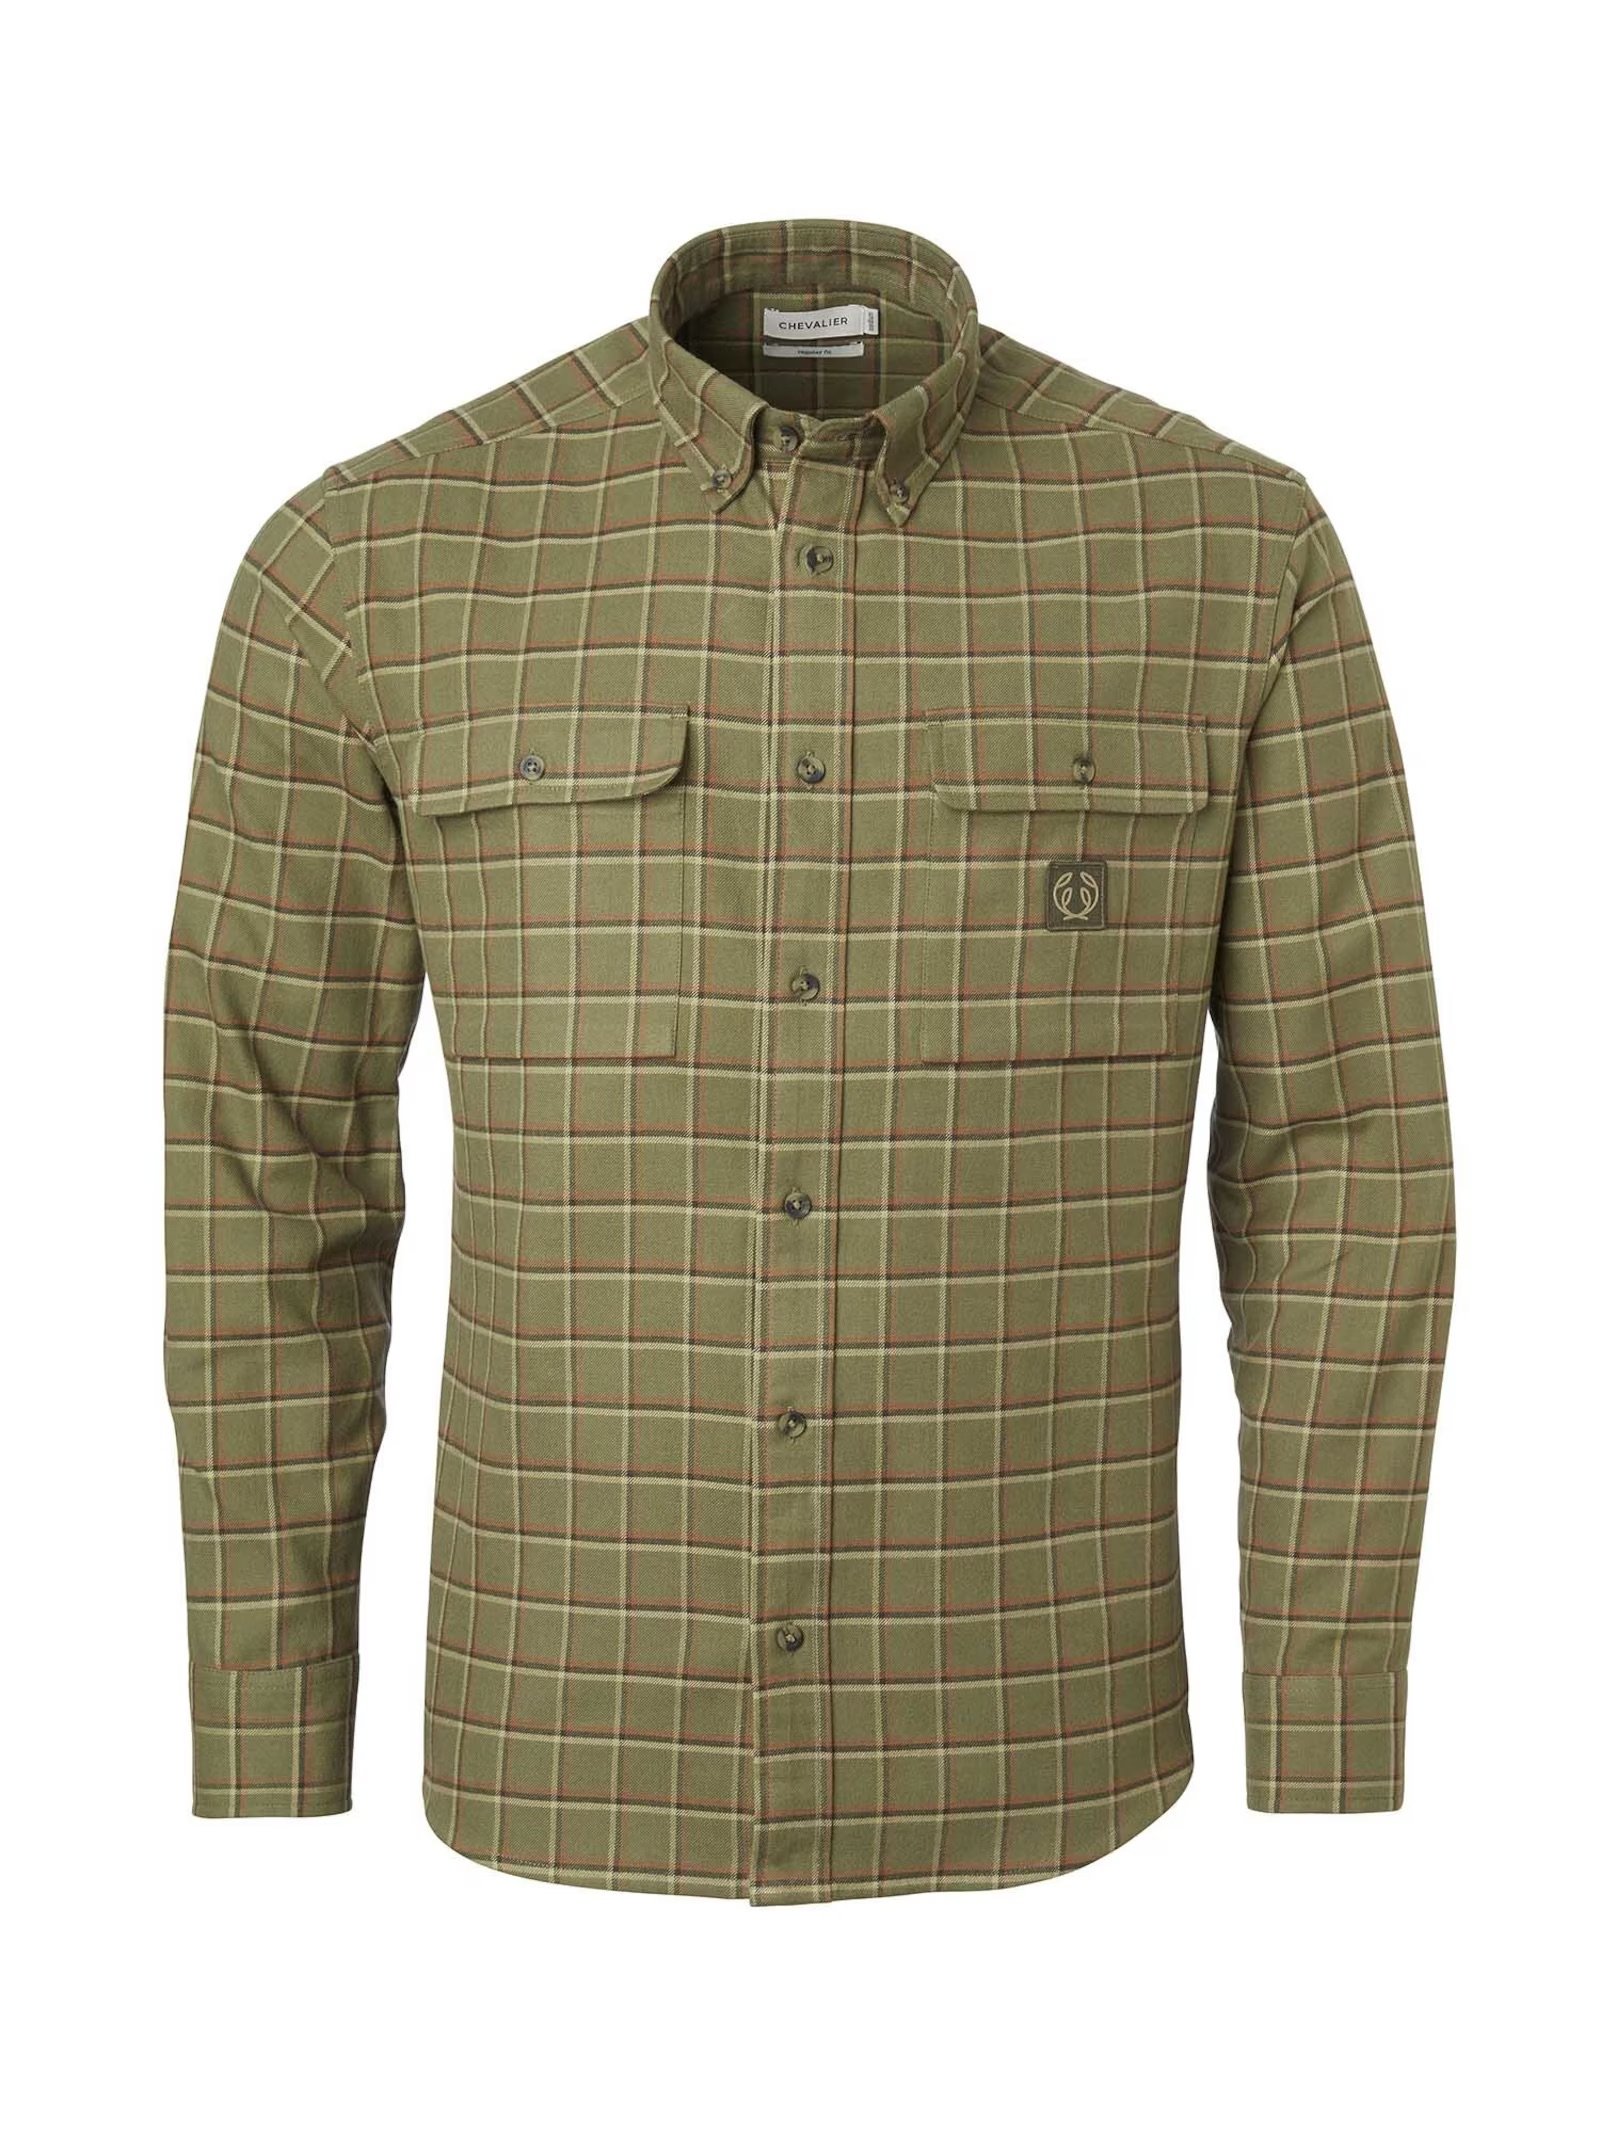 Chevalier Heron Flannel Shirt Men – Field Green